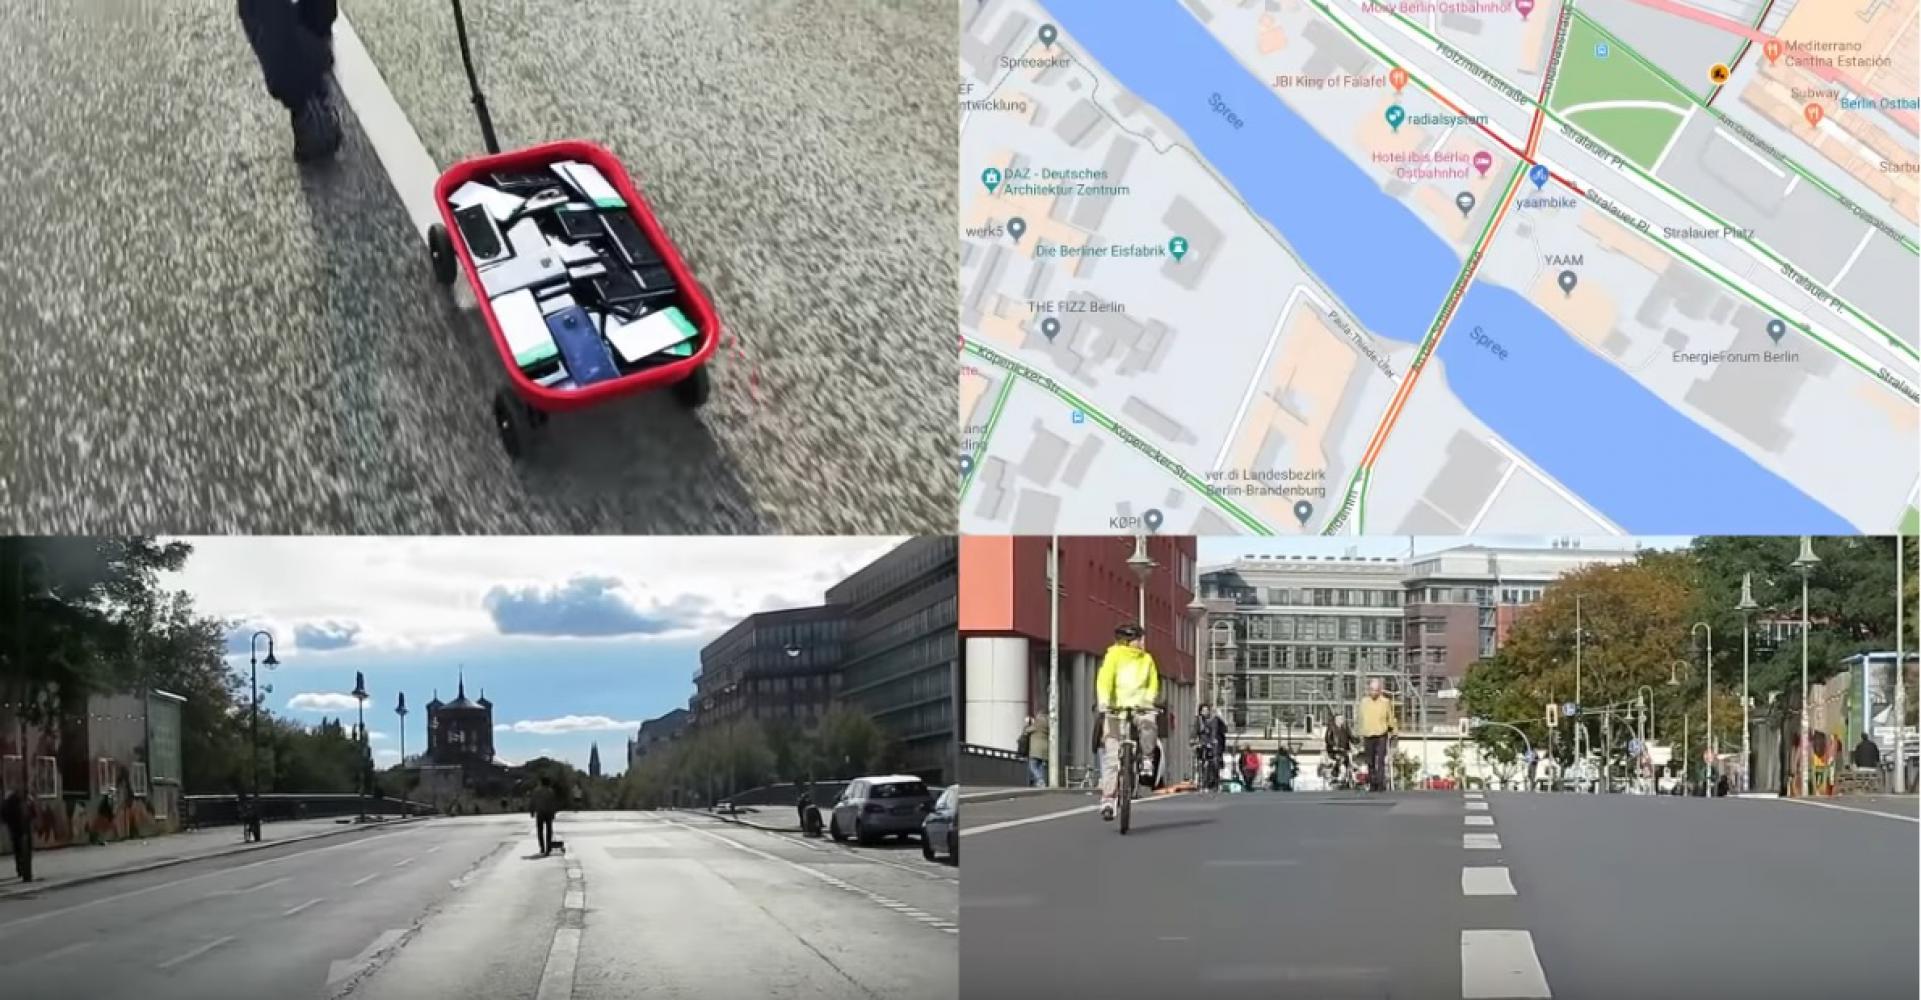 Simon Weckert "Google Maps Hacks", 2019. Screenshot via Youtube